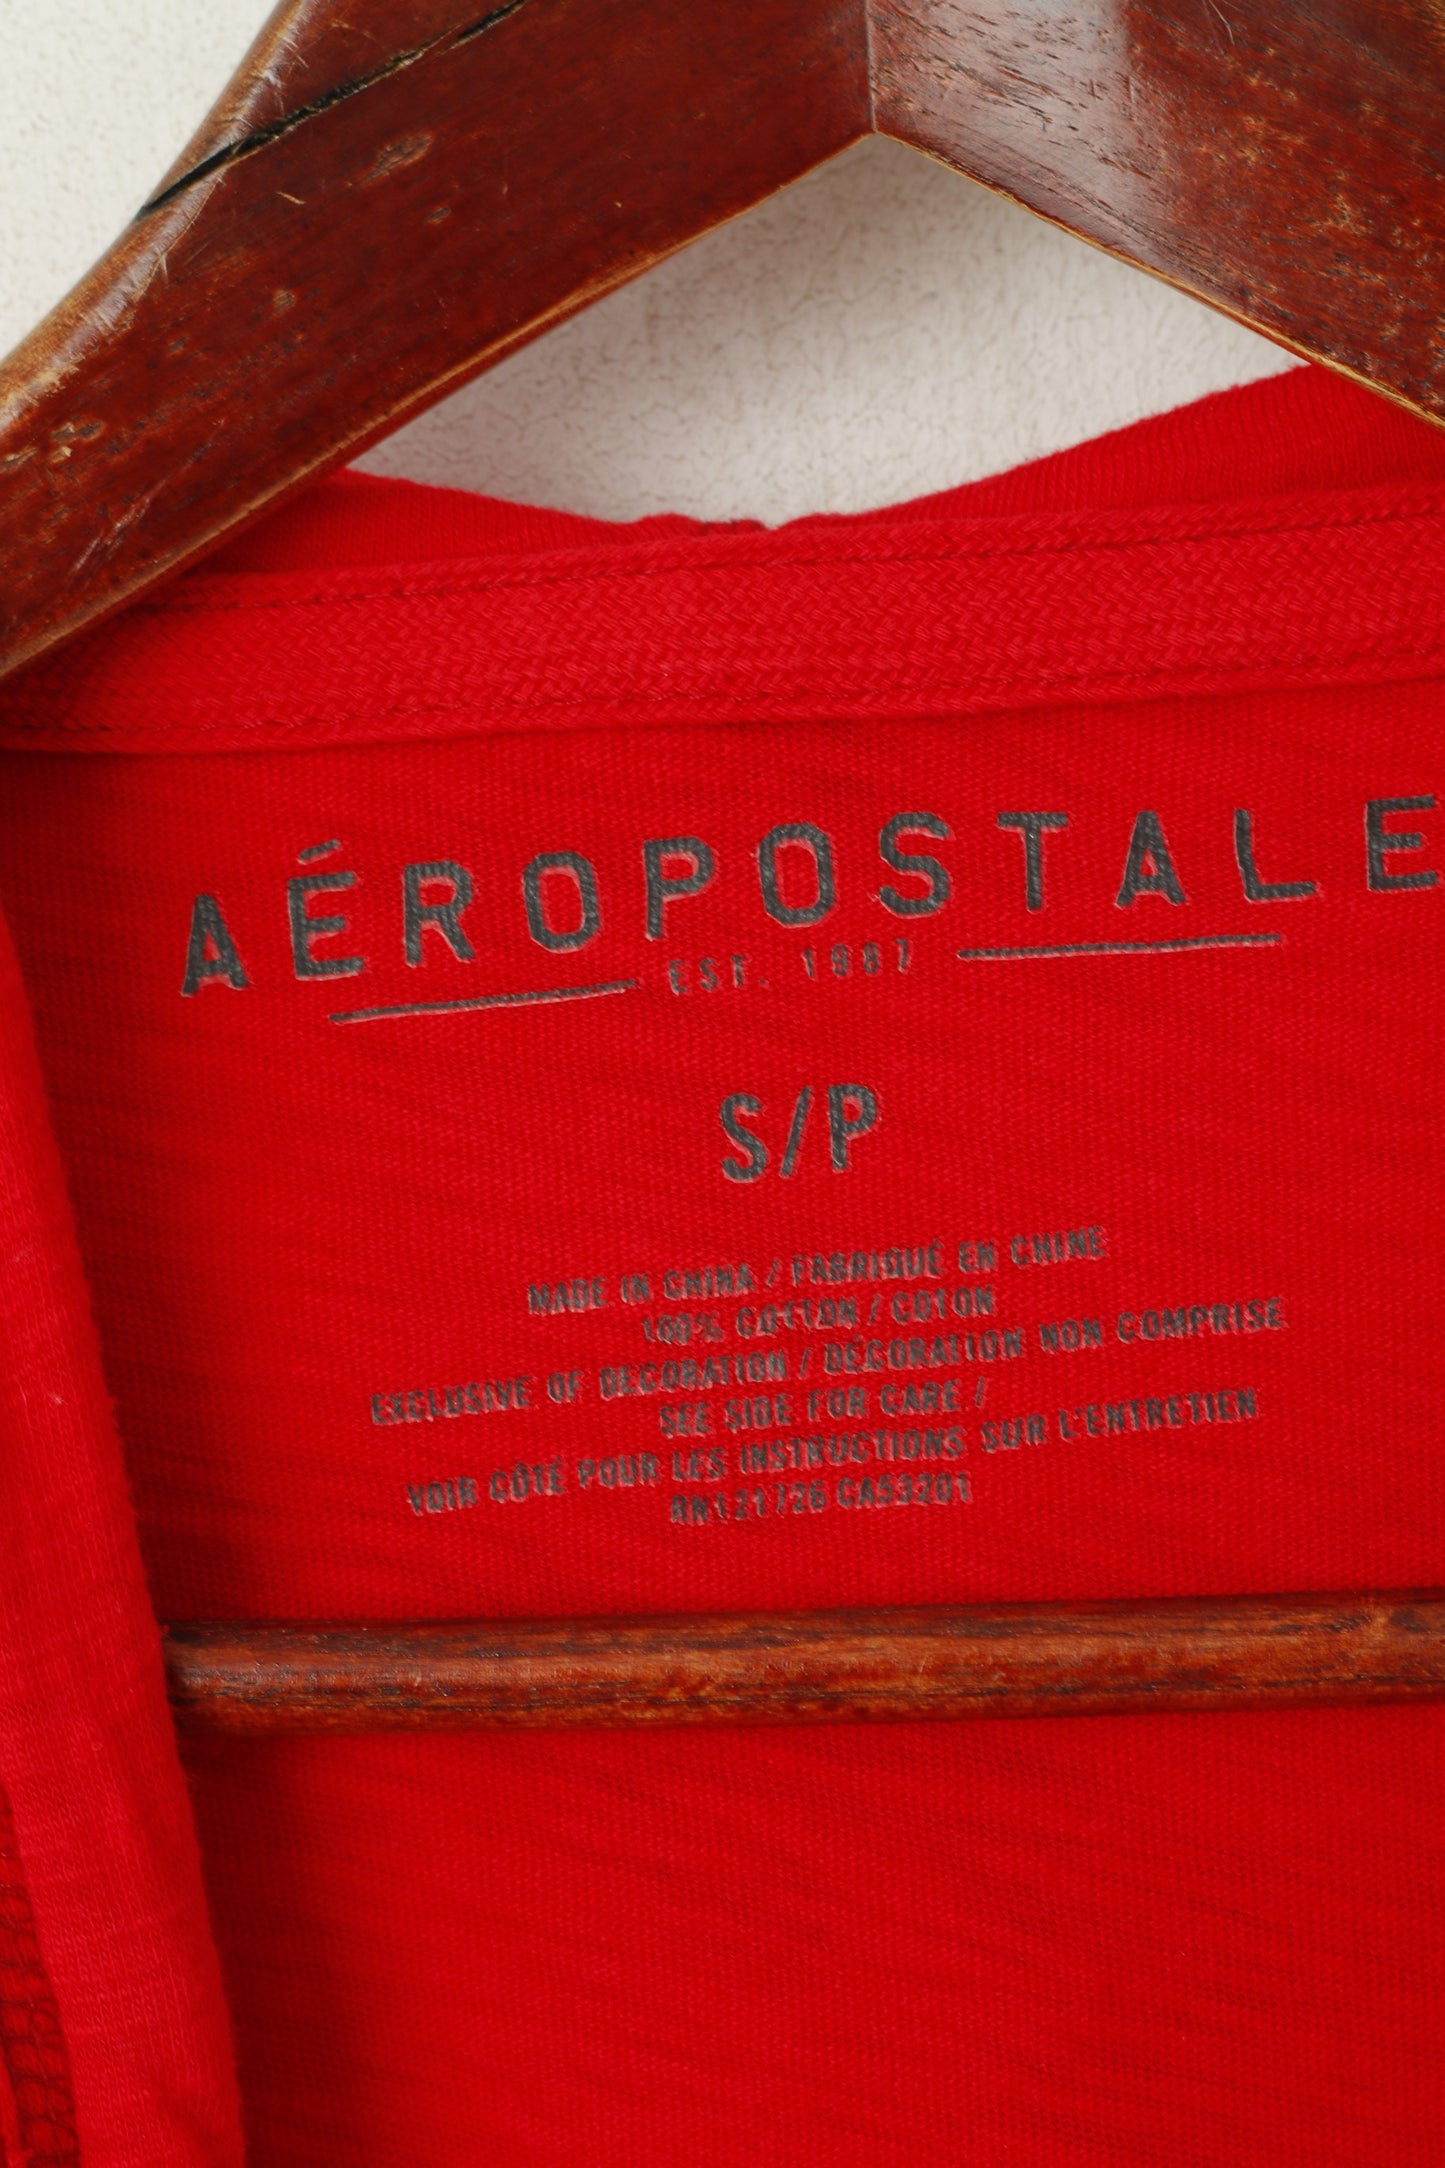 Aeropostale Men S Shirt Red Cotton Hooded New York Graphic Kangaroo Pocket Top